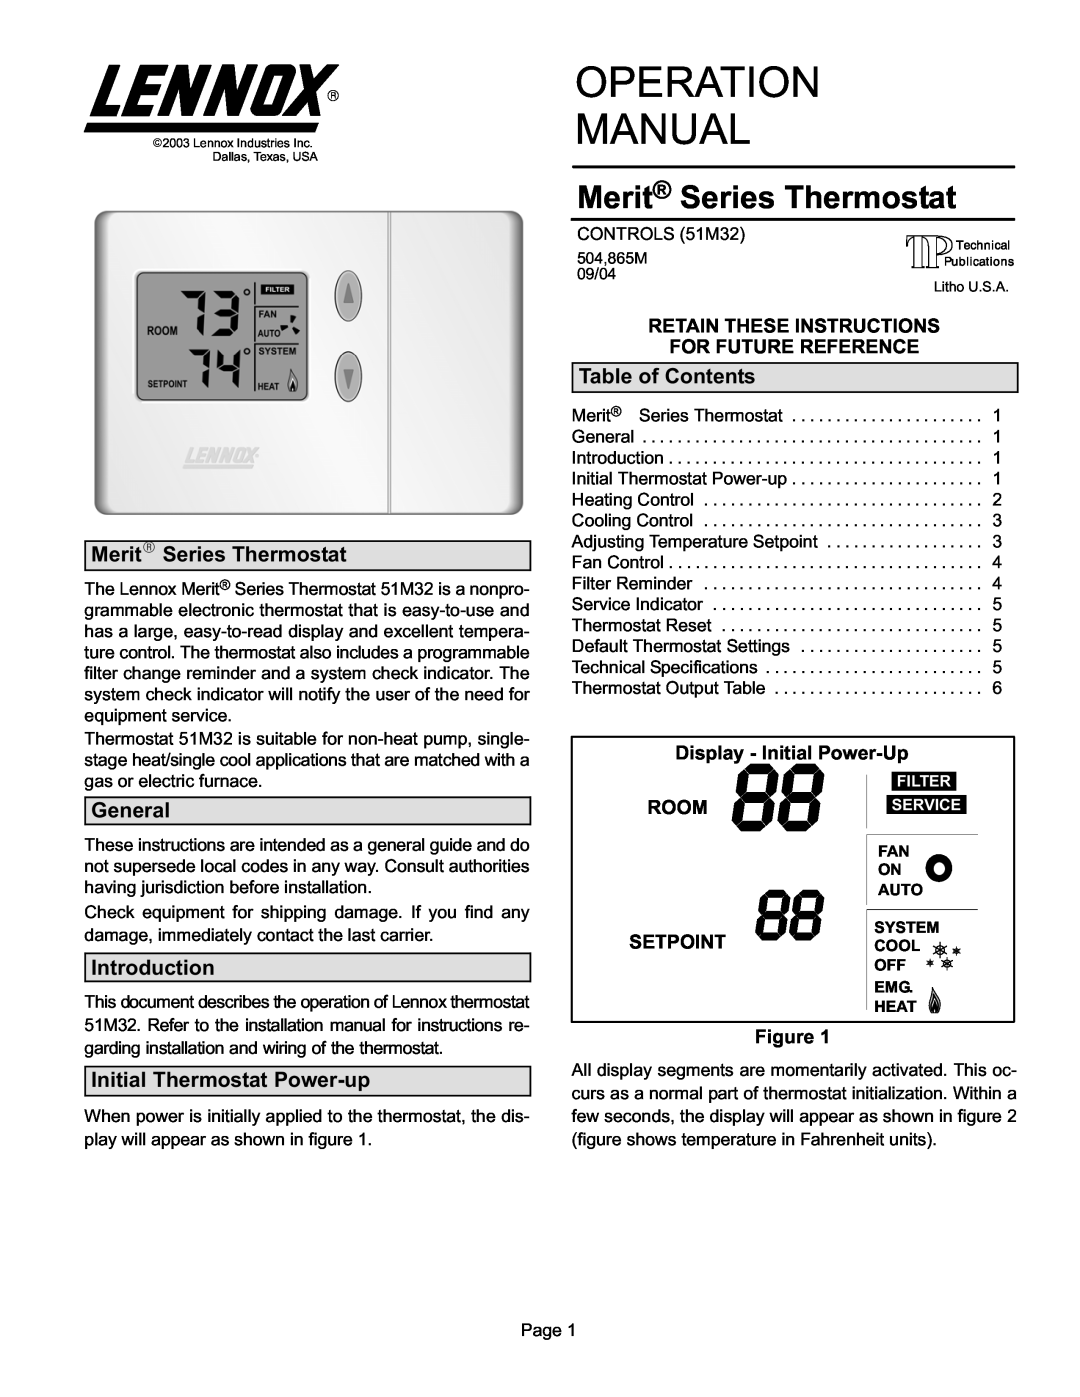 Lennox International Inc 51M32 operation manual Merit Series Thermostat, MeritR Series Thermostat, Table of Contents 